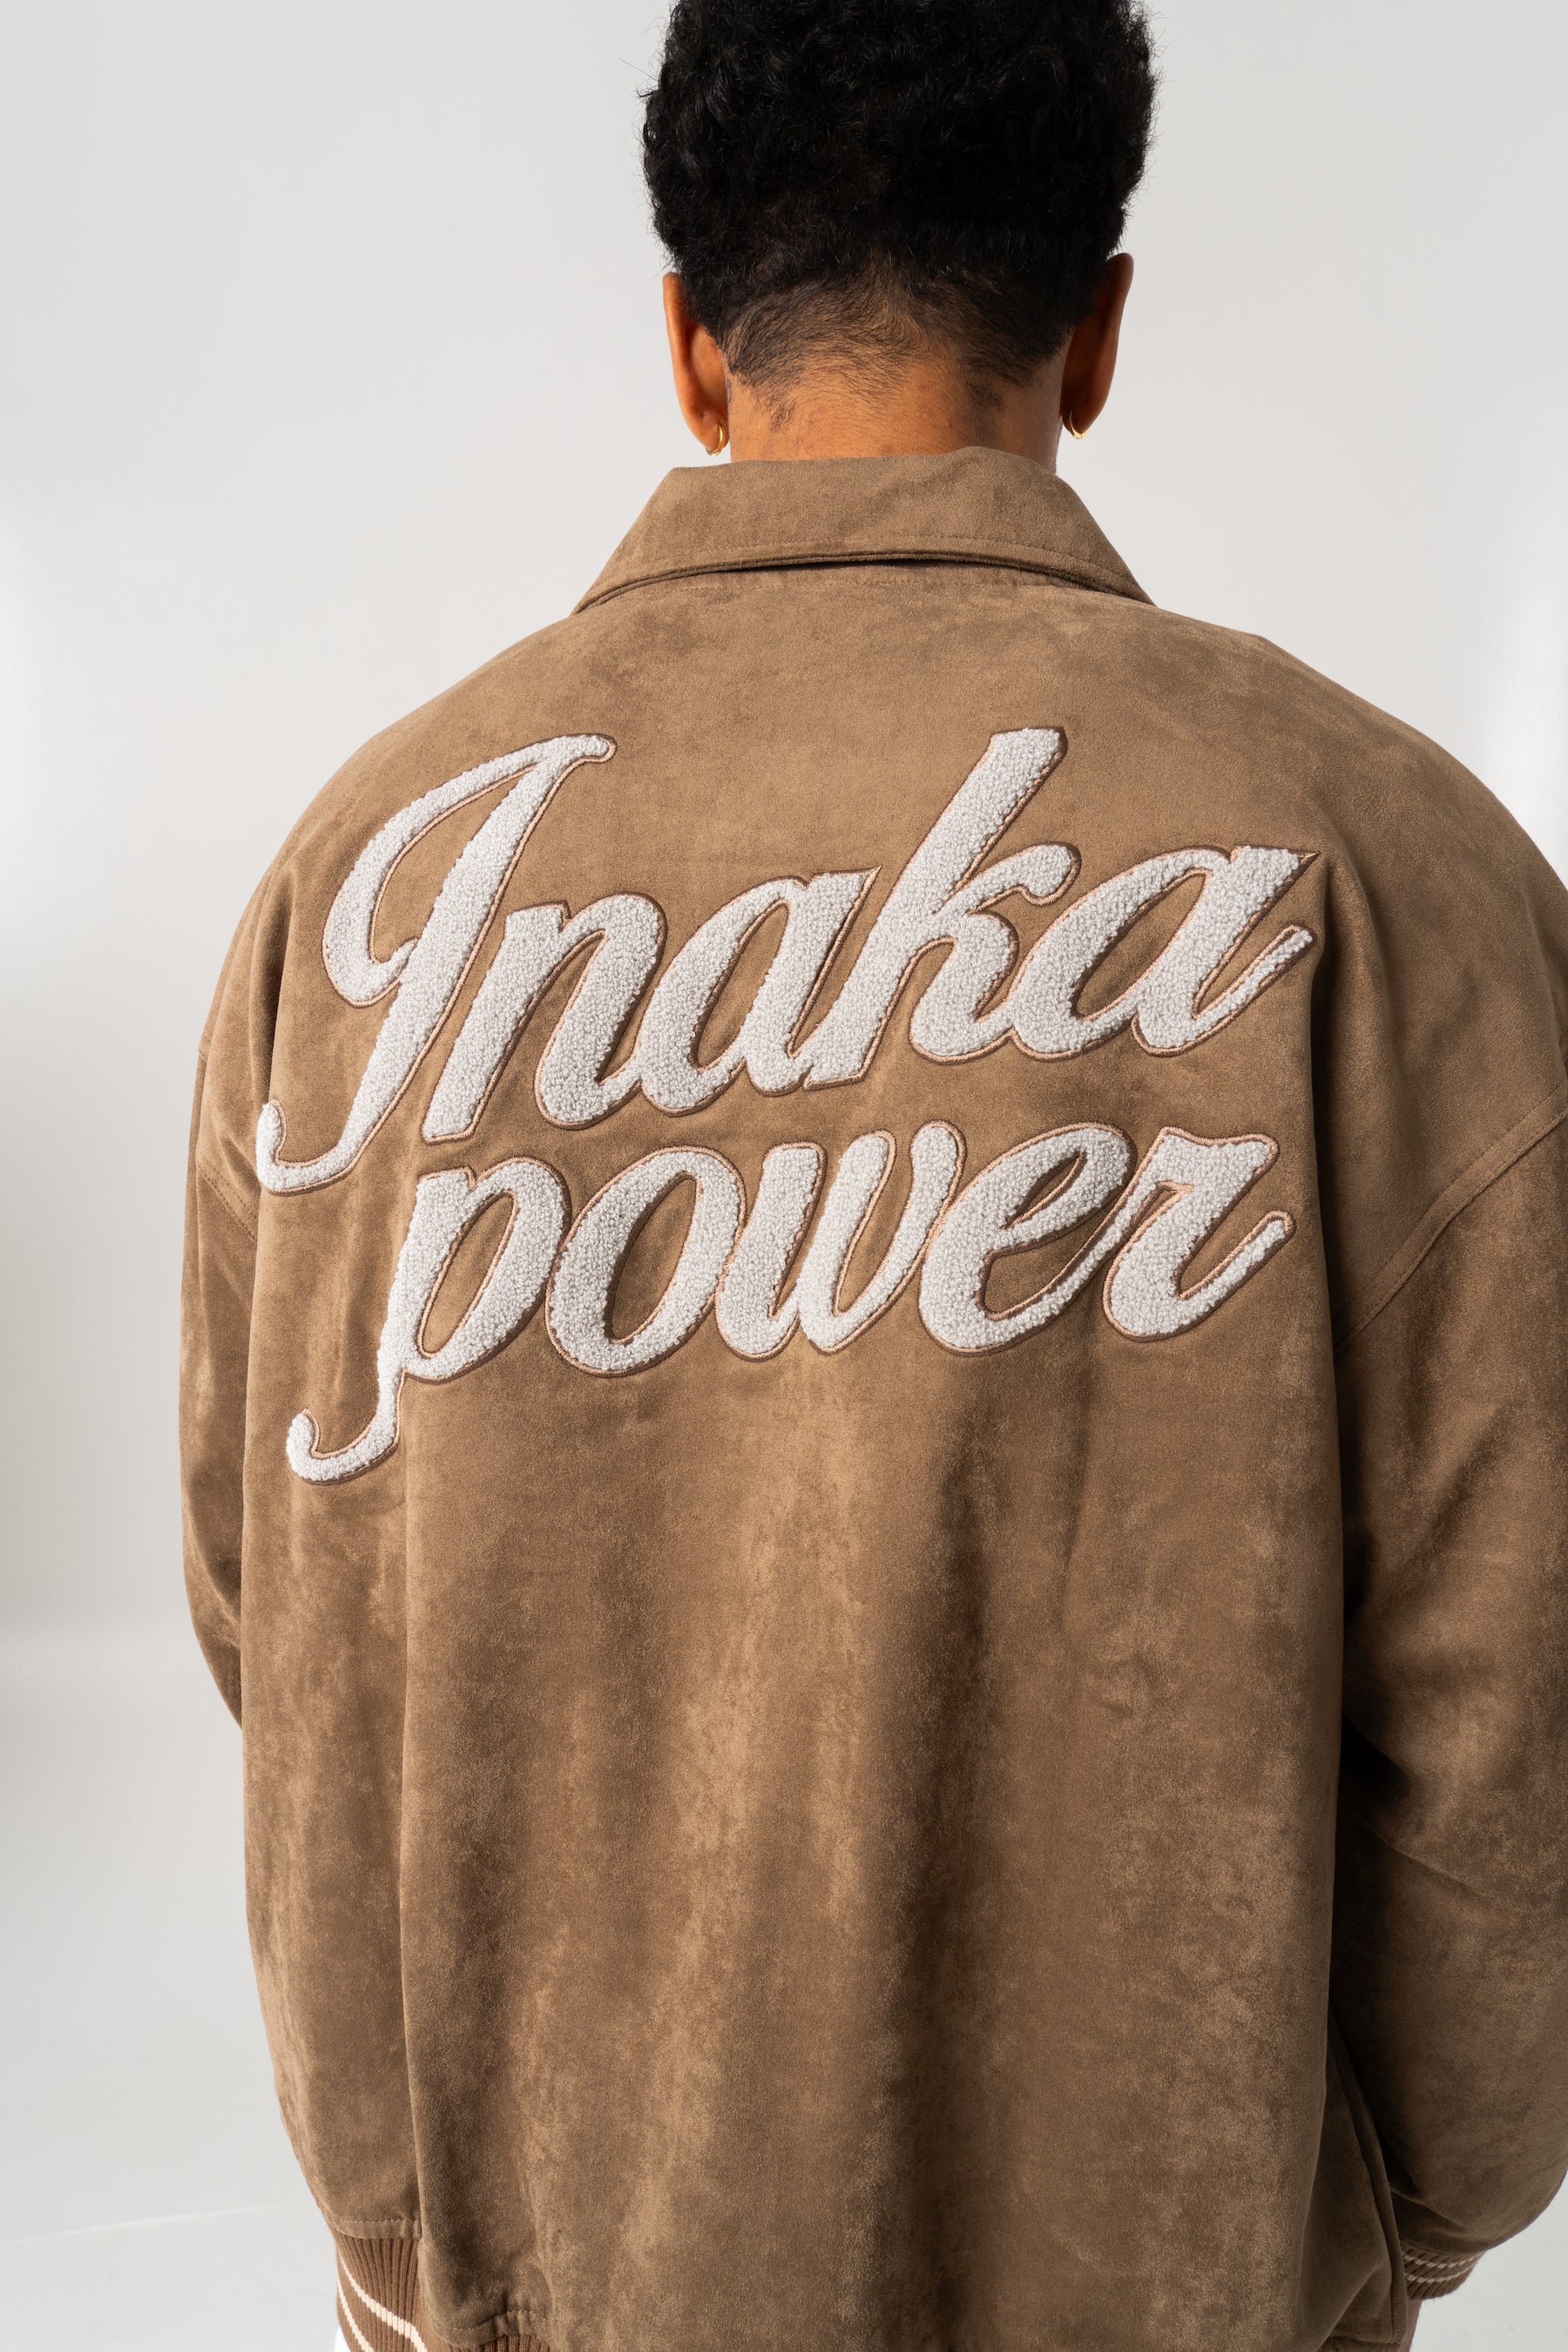 Inaka Power Men's 4 Year Letterman Jacket